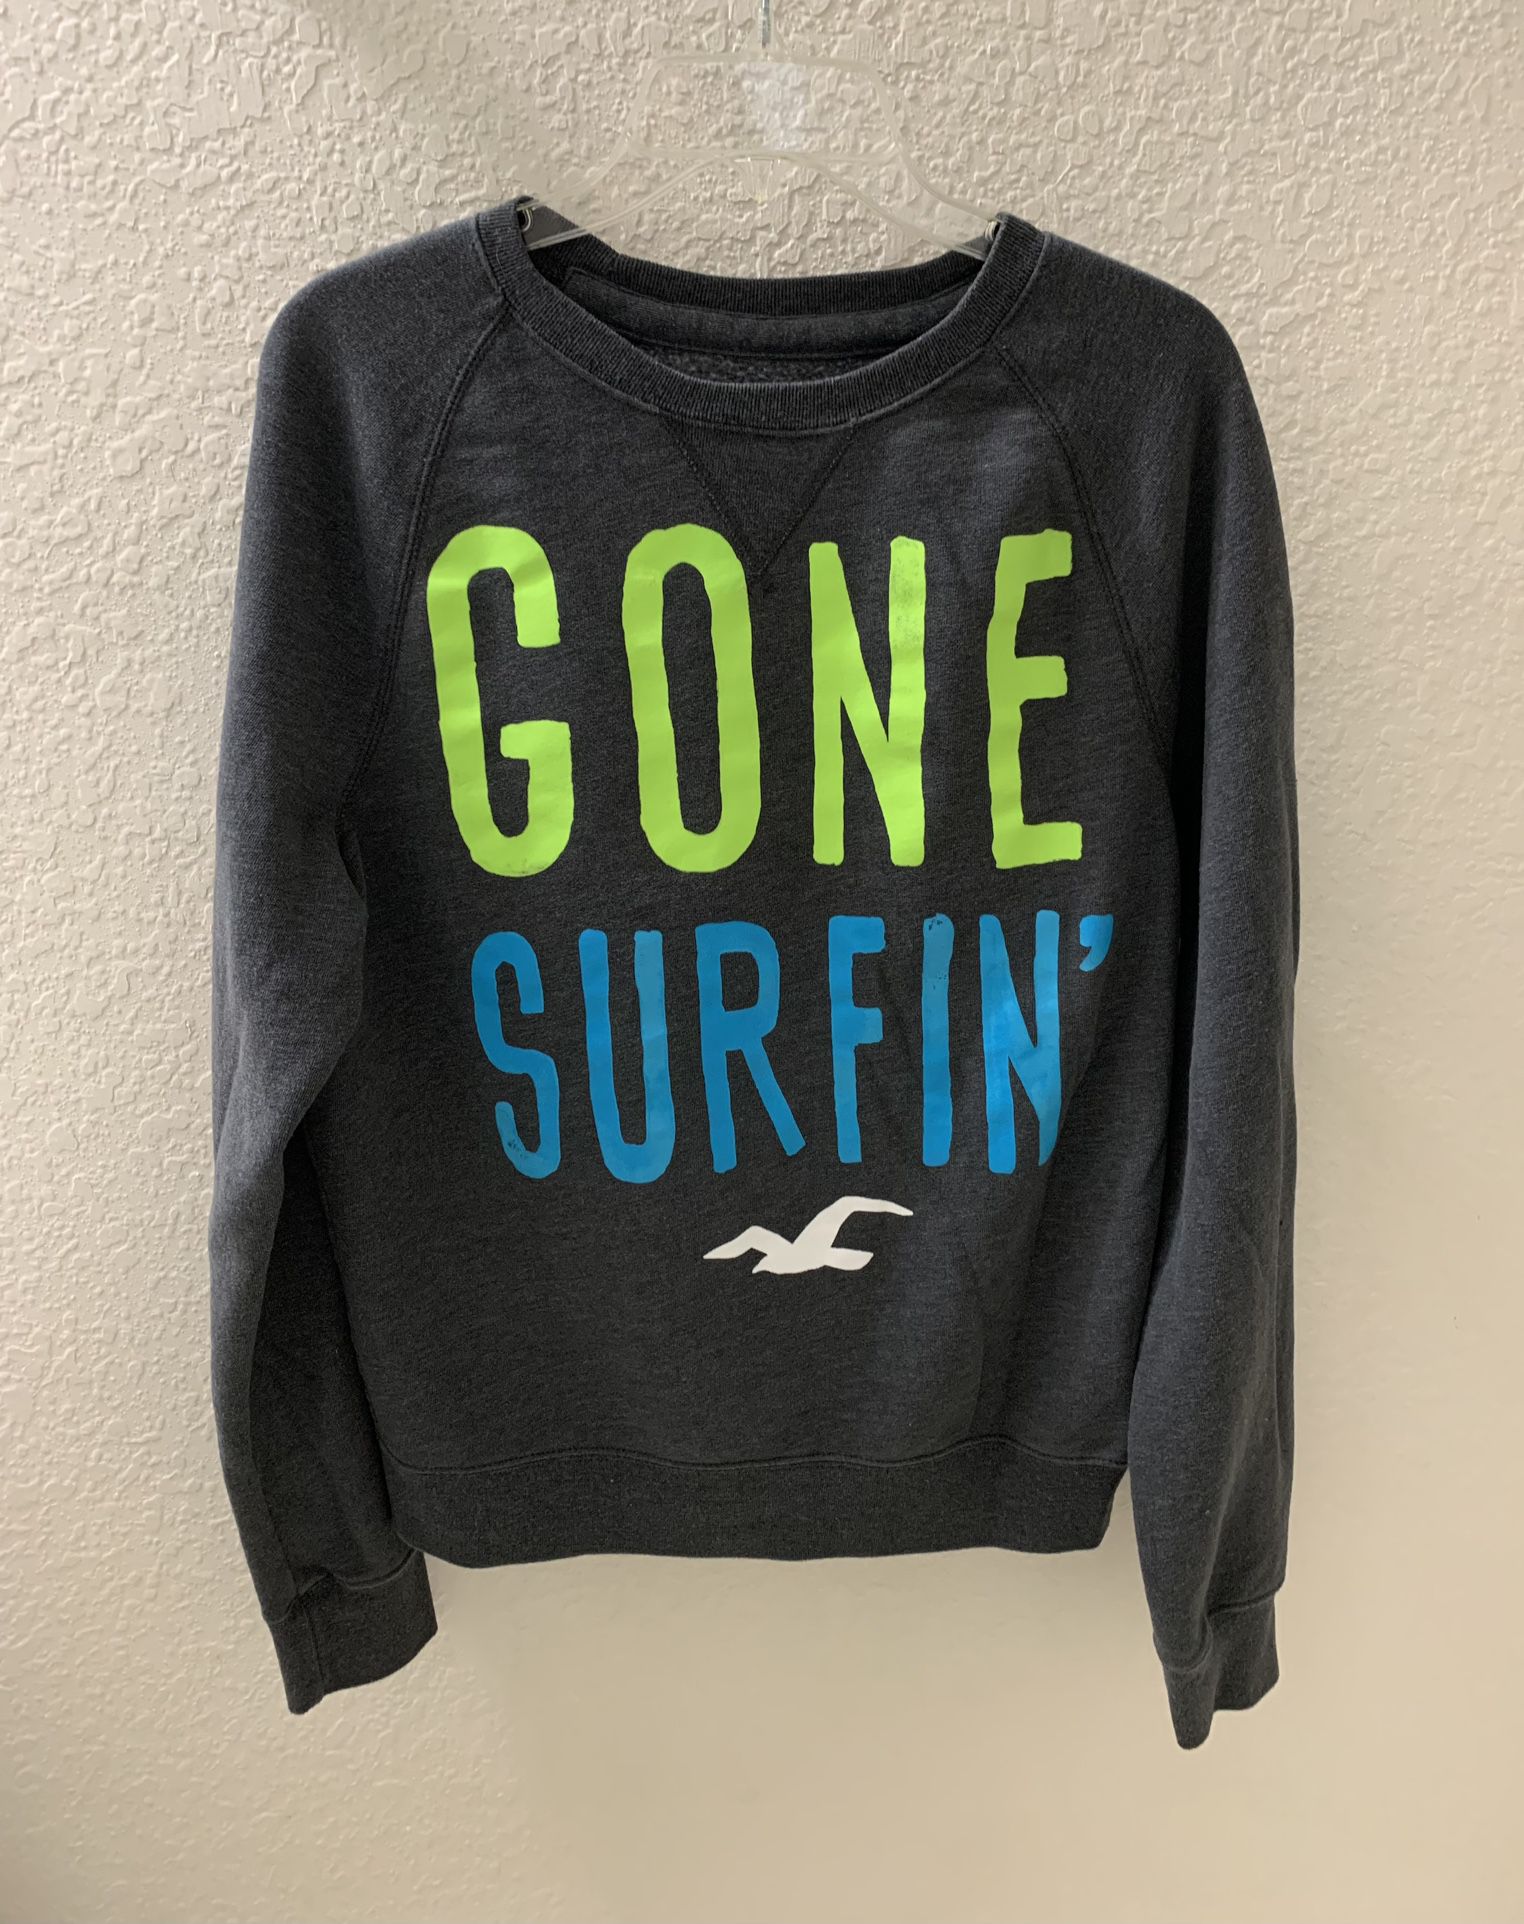 Hollister “Gone Surfin” Men’s Pullover Sweatshirt Size Large